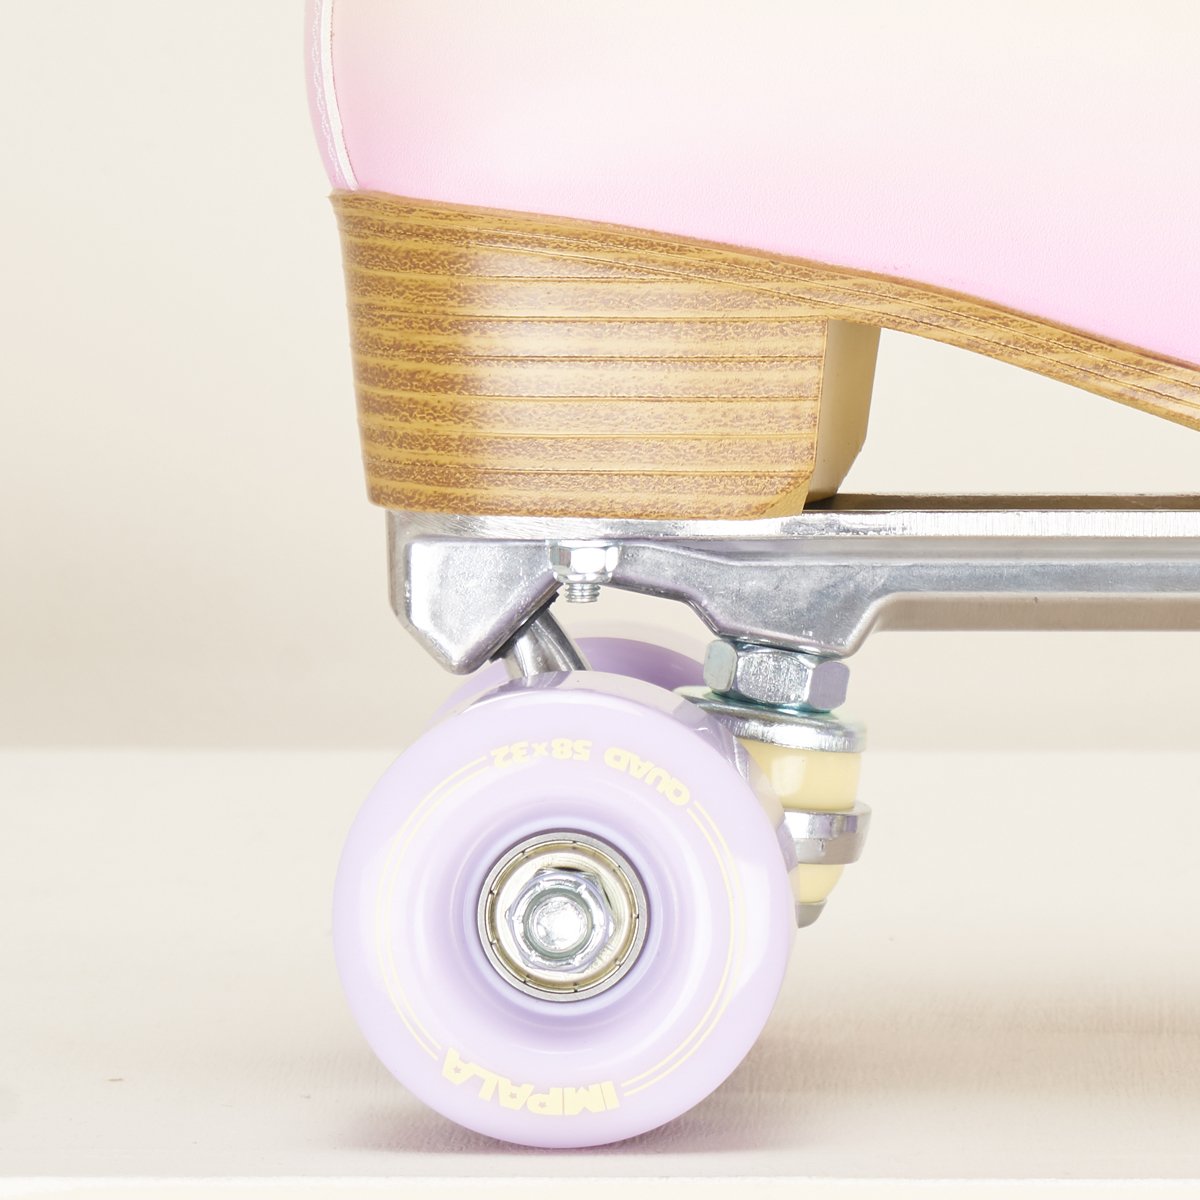 Impala Roller Skates - Pastel Fade